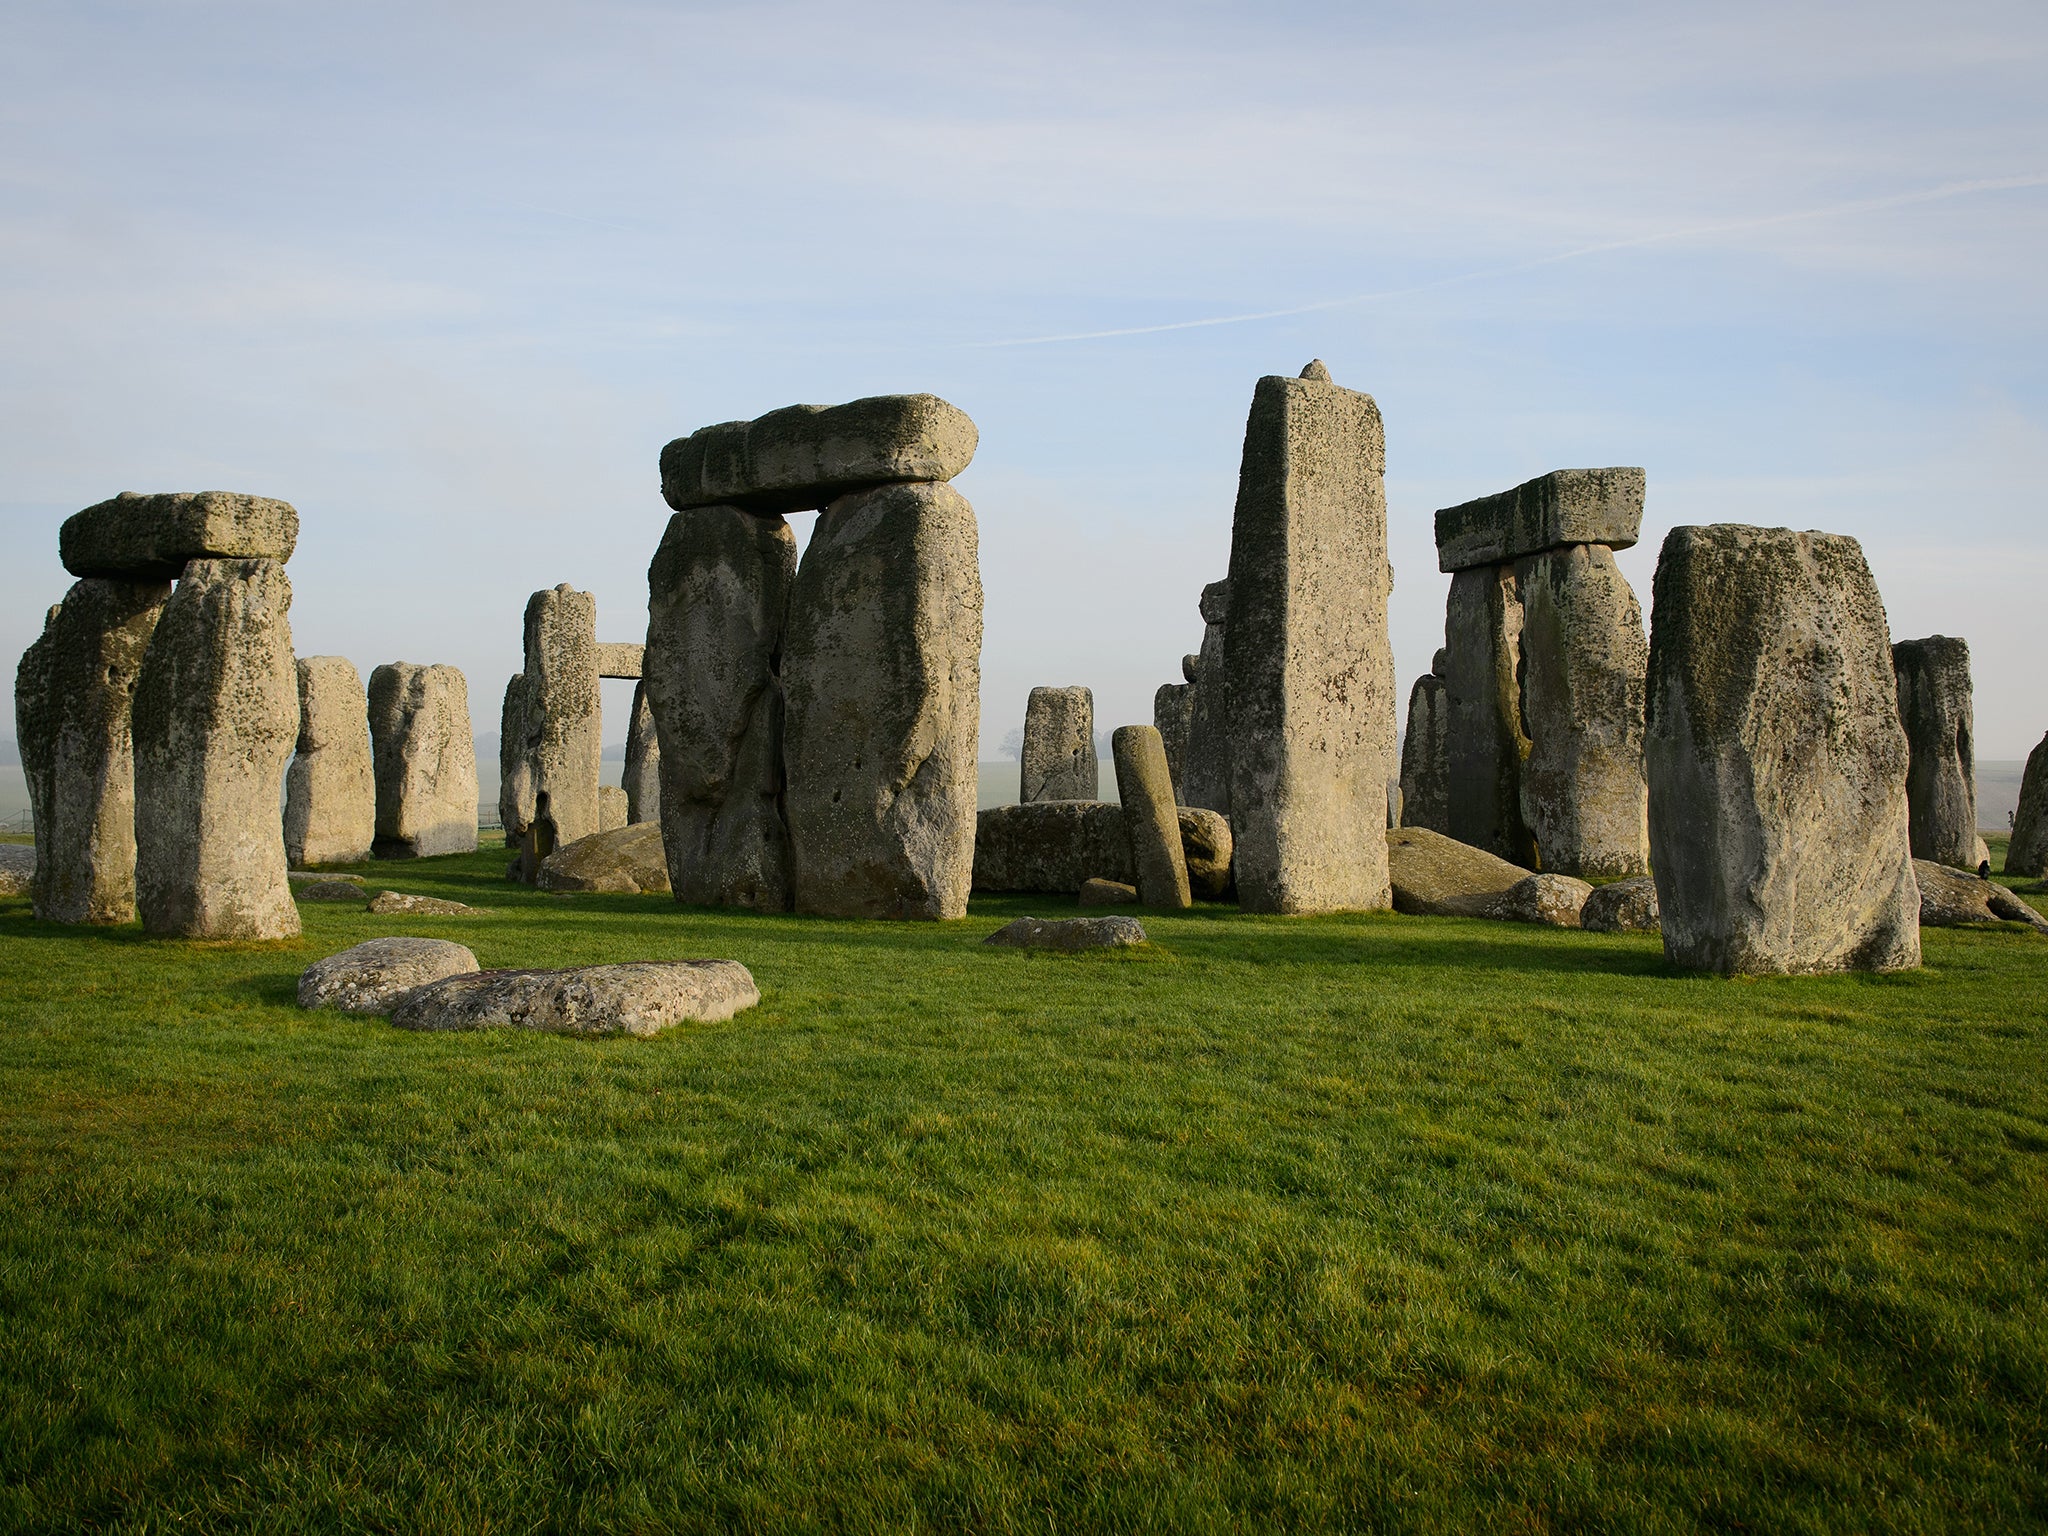 Pillar talk: Operation Stonehenge: What Lies Beneath investigated the prehistoric ruin